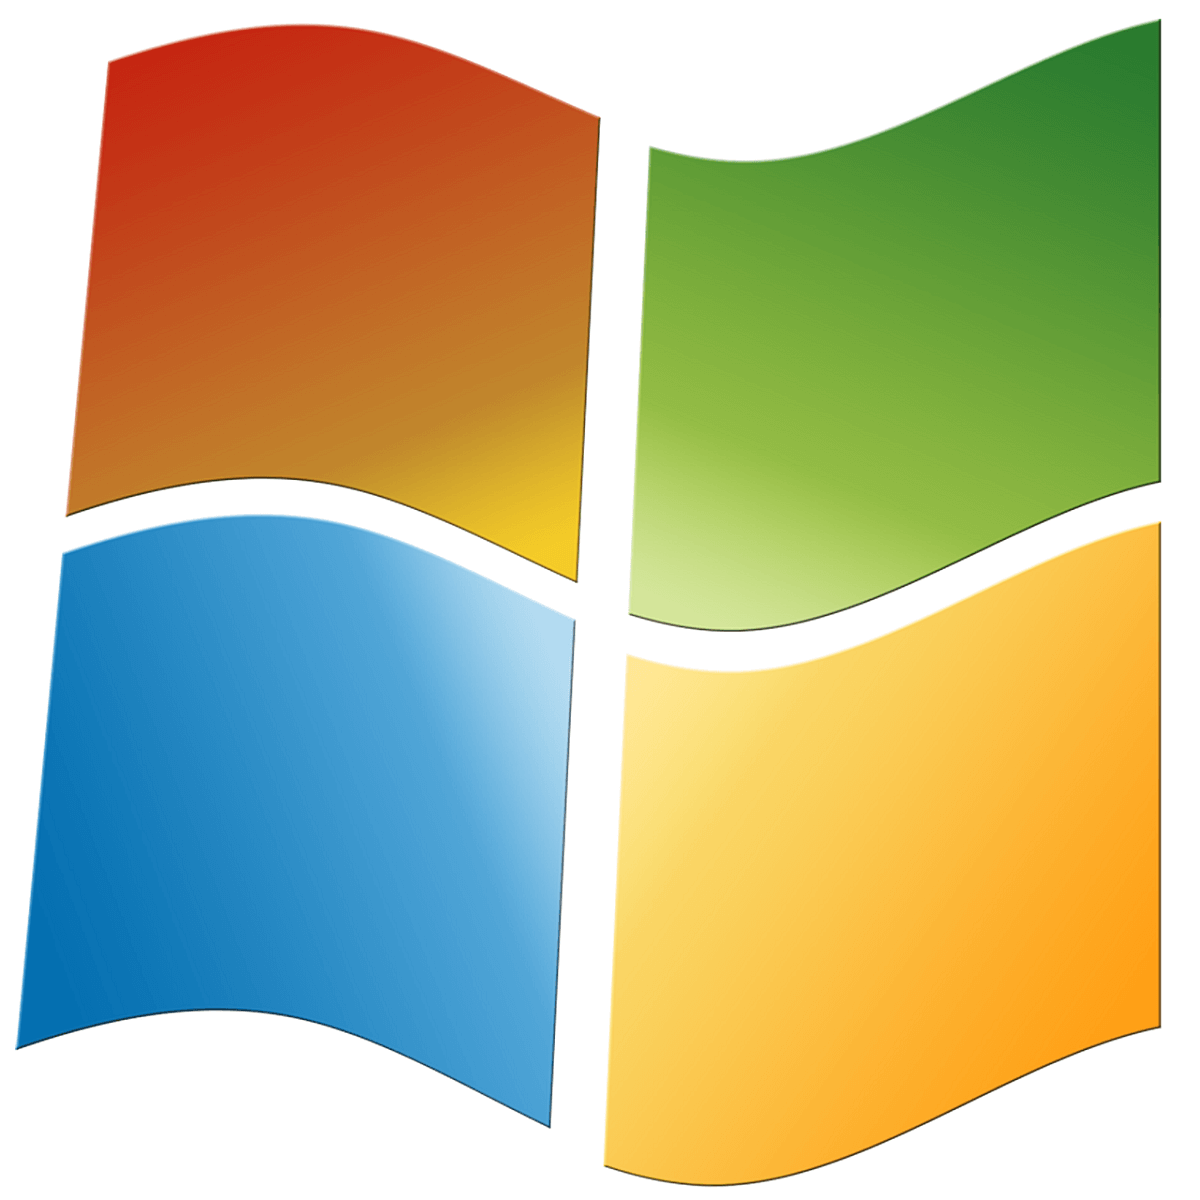 Windows 7 market share news